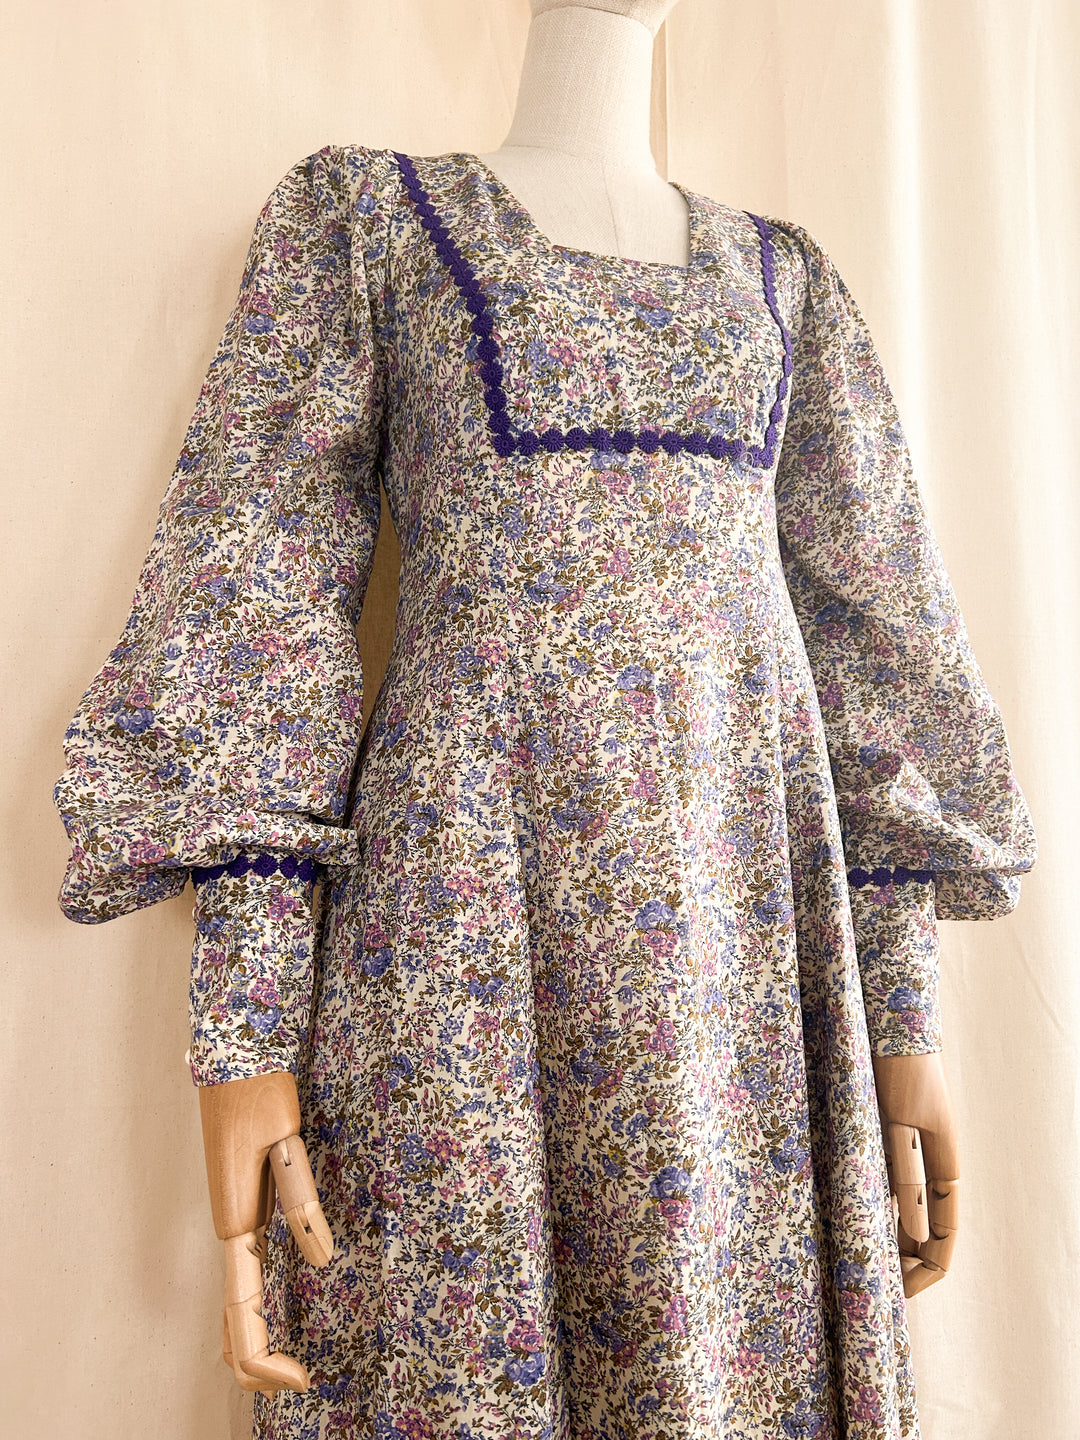 Iris ~ Beautiful handmade floral cotton prairie dream dress